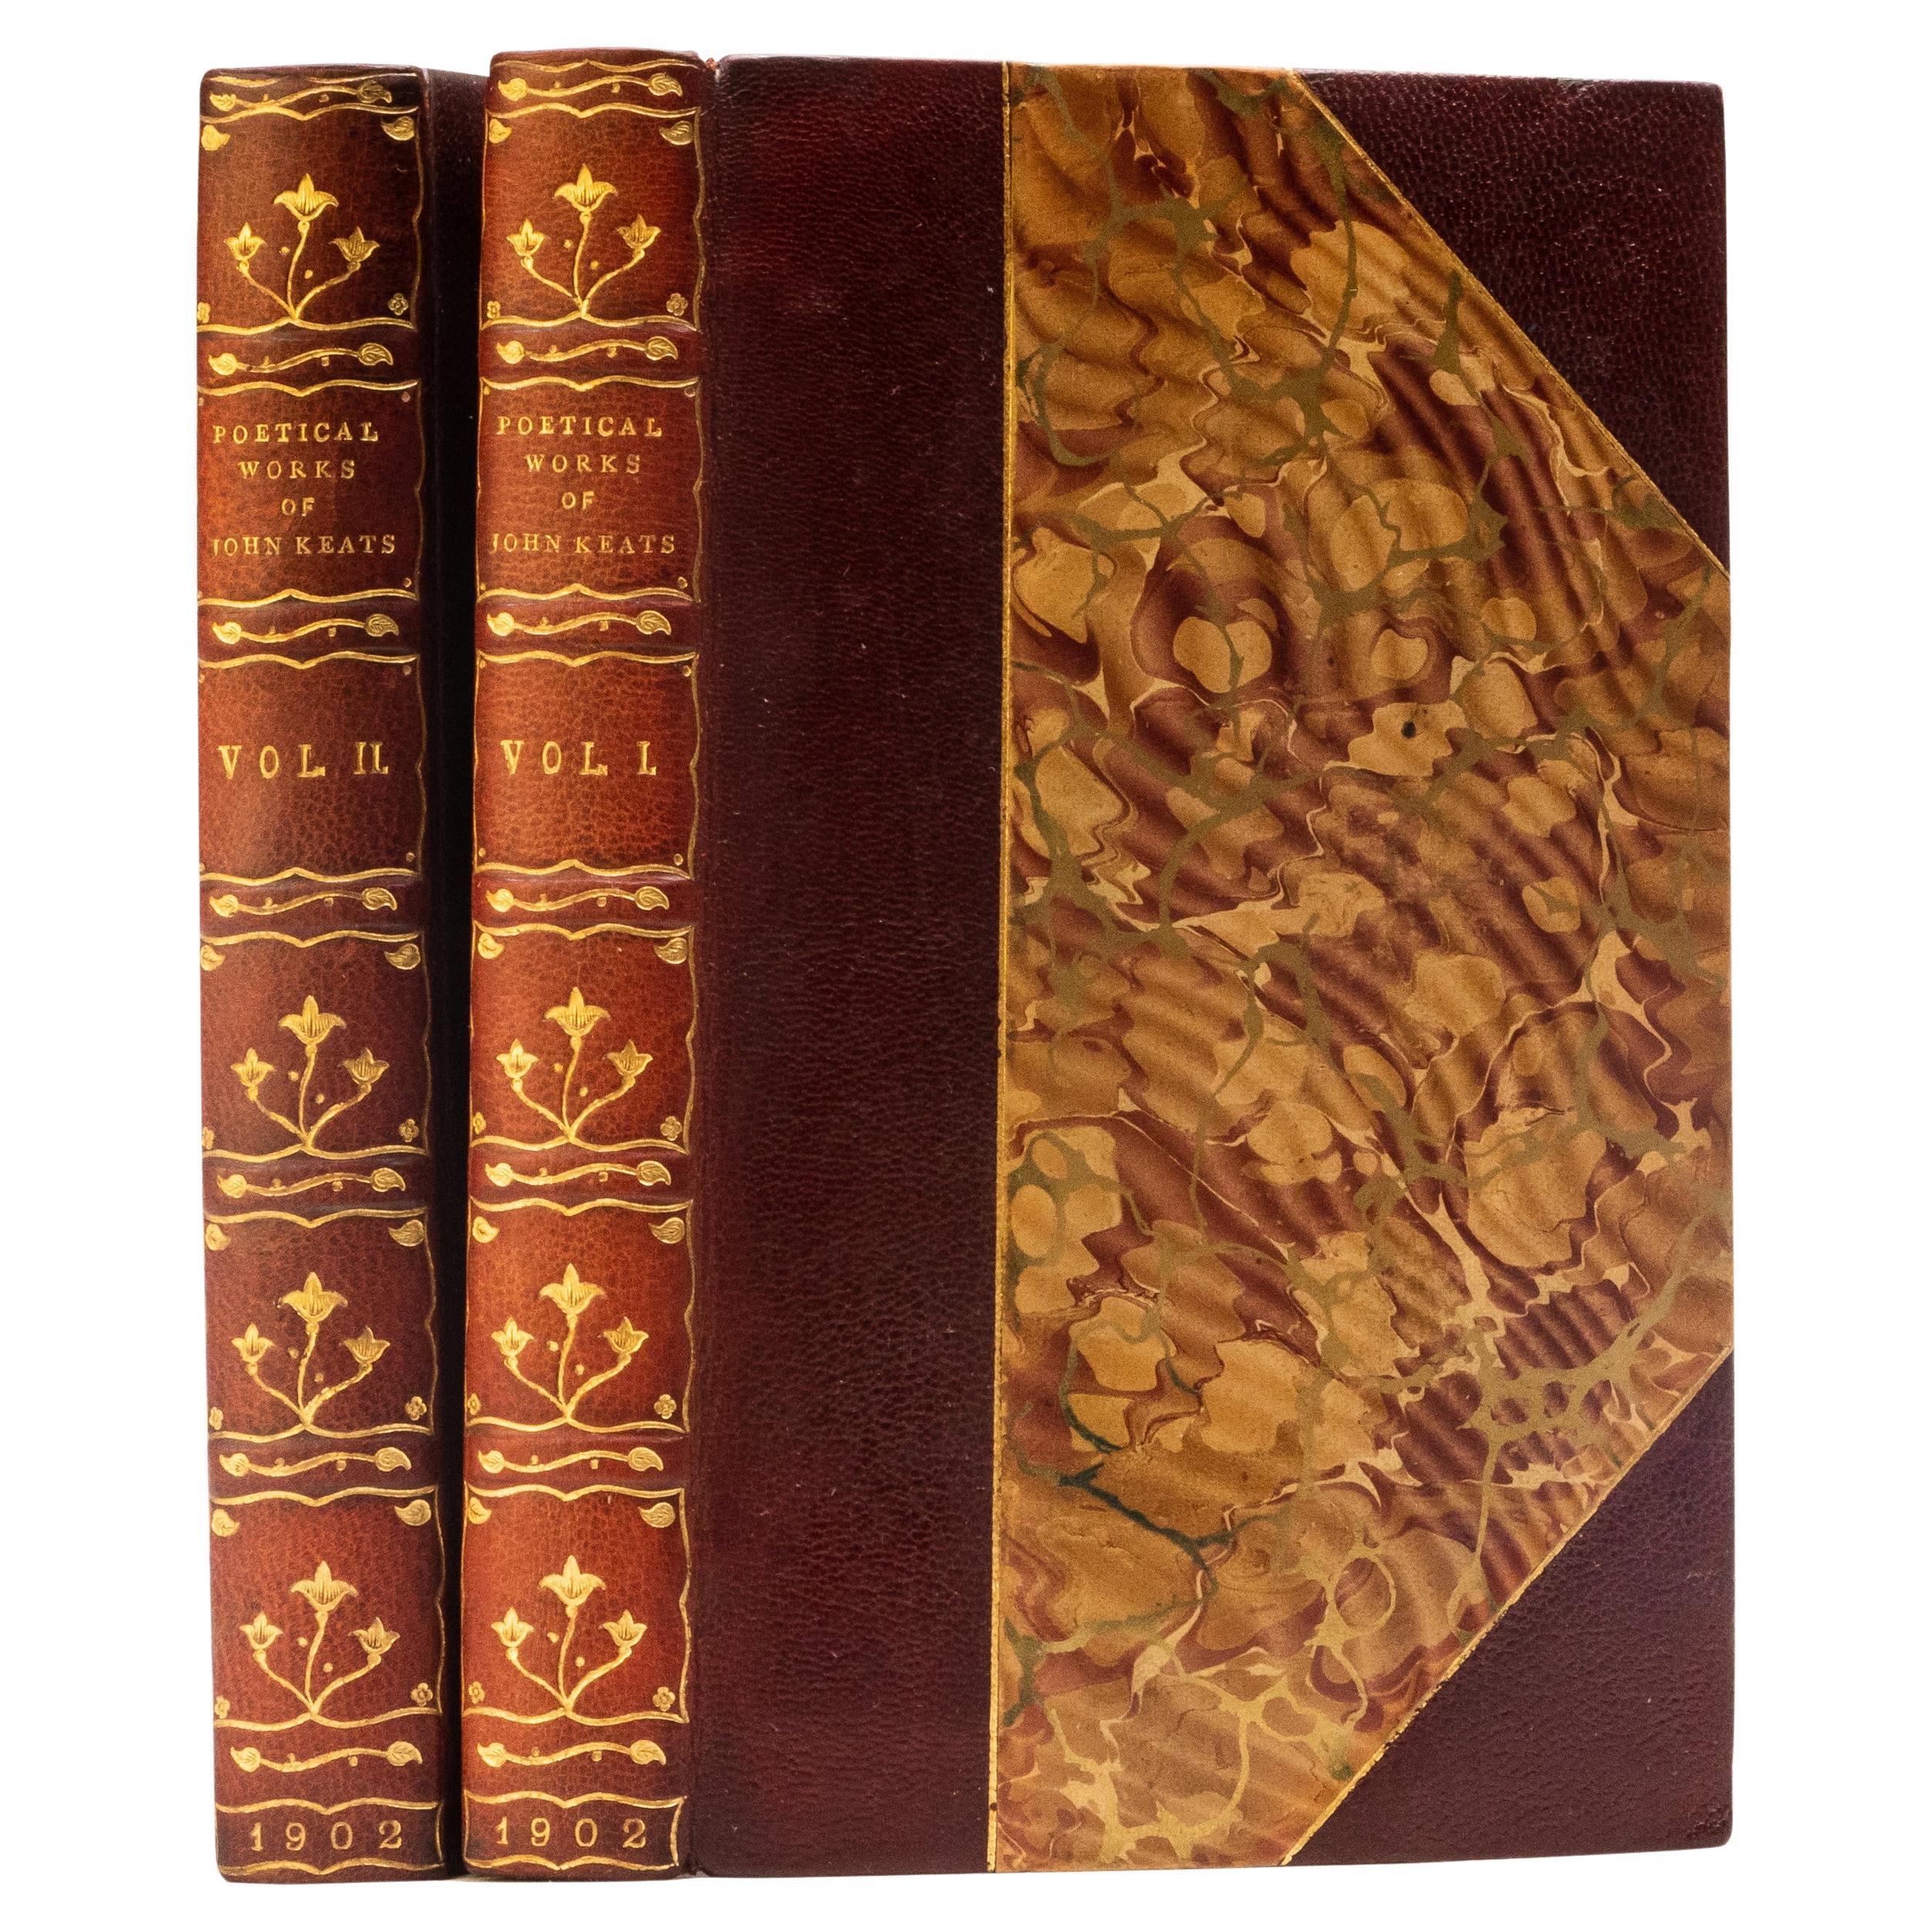 2 Volumes, John Keats, Poetical Works of John Keats